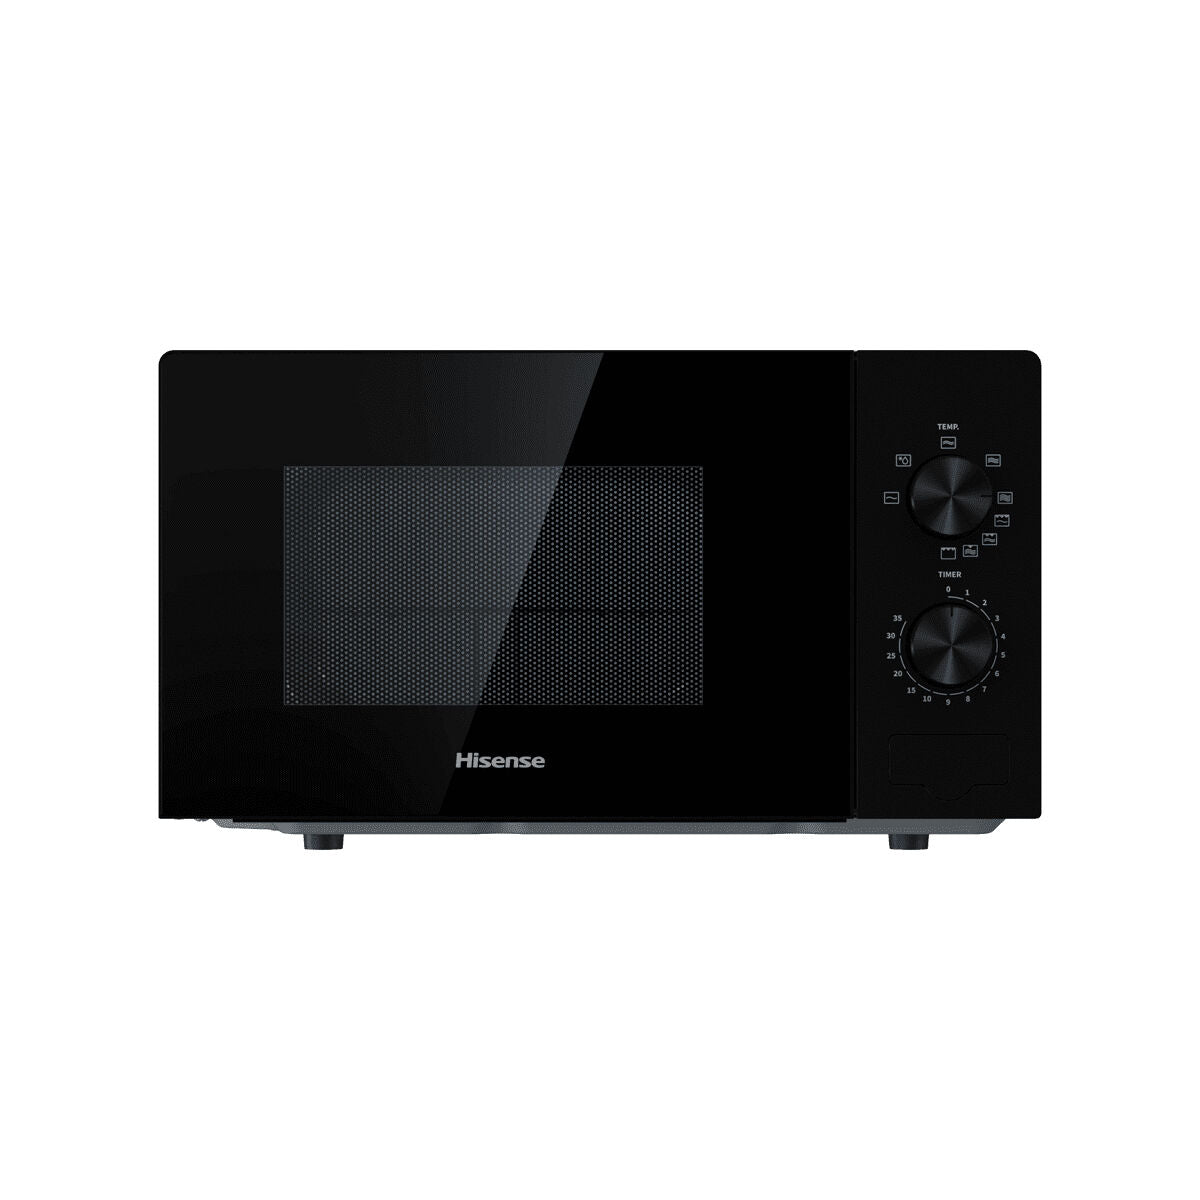 Microwave Hisense H20MOBP1 Black 700 W 20 L (Refurbished B)